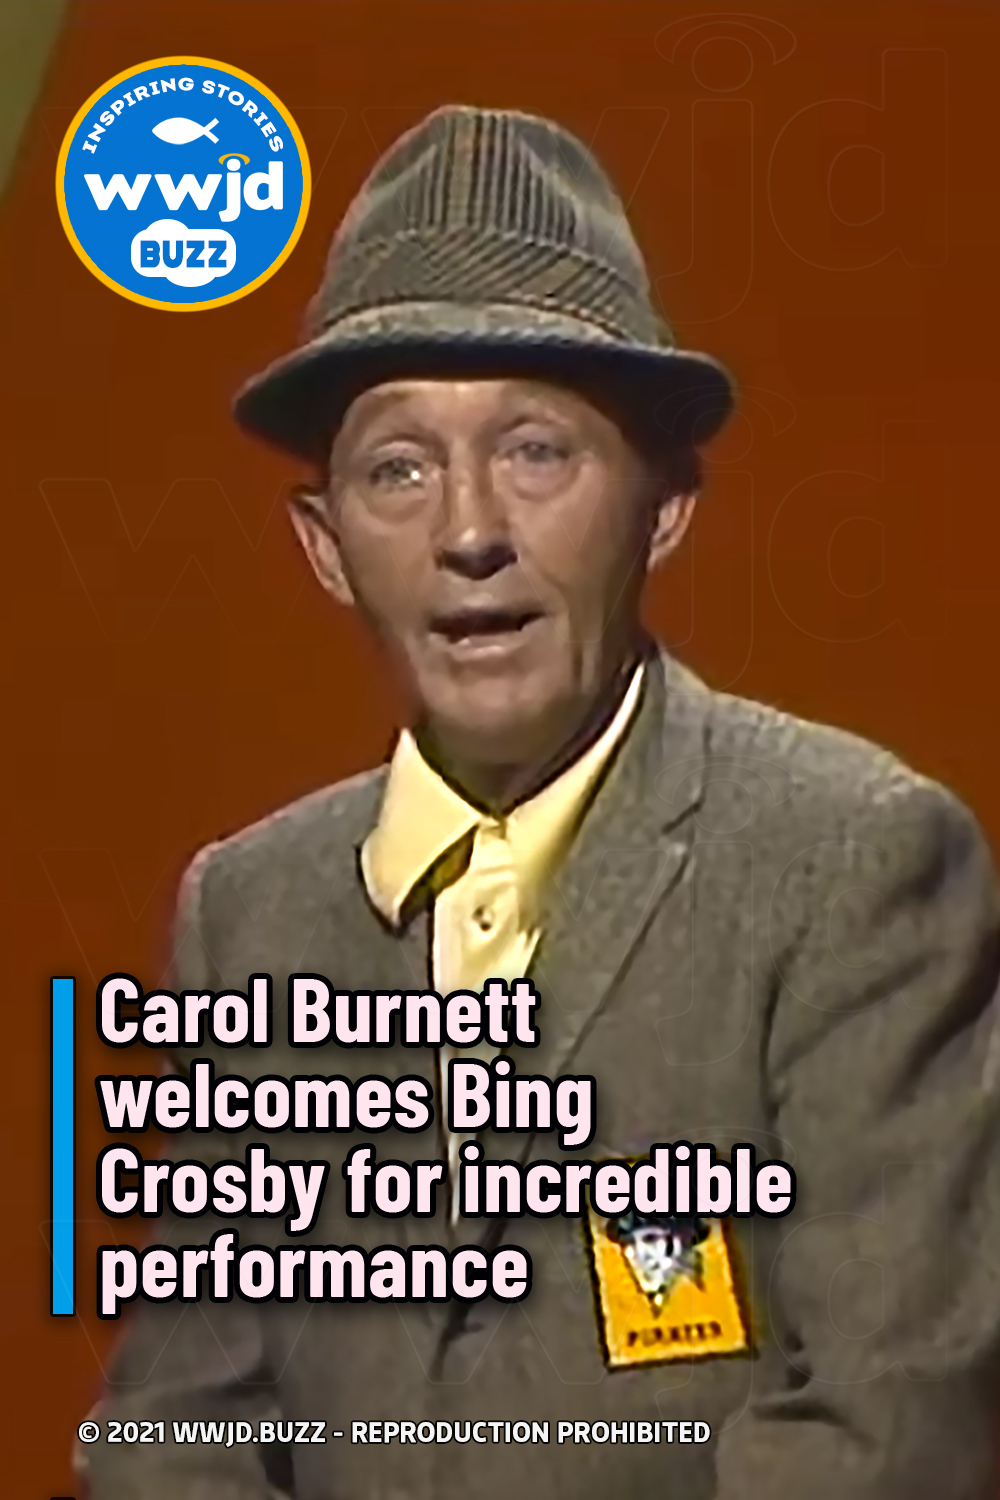 Carol Burnett welcomes Bing Crosby for incredible performance